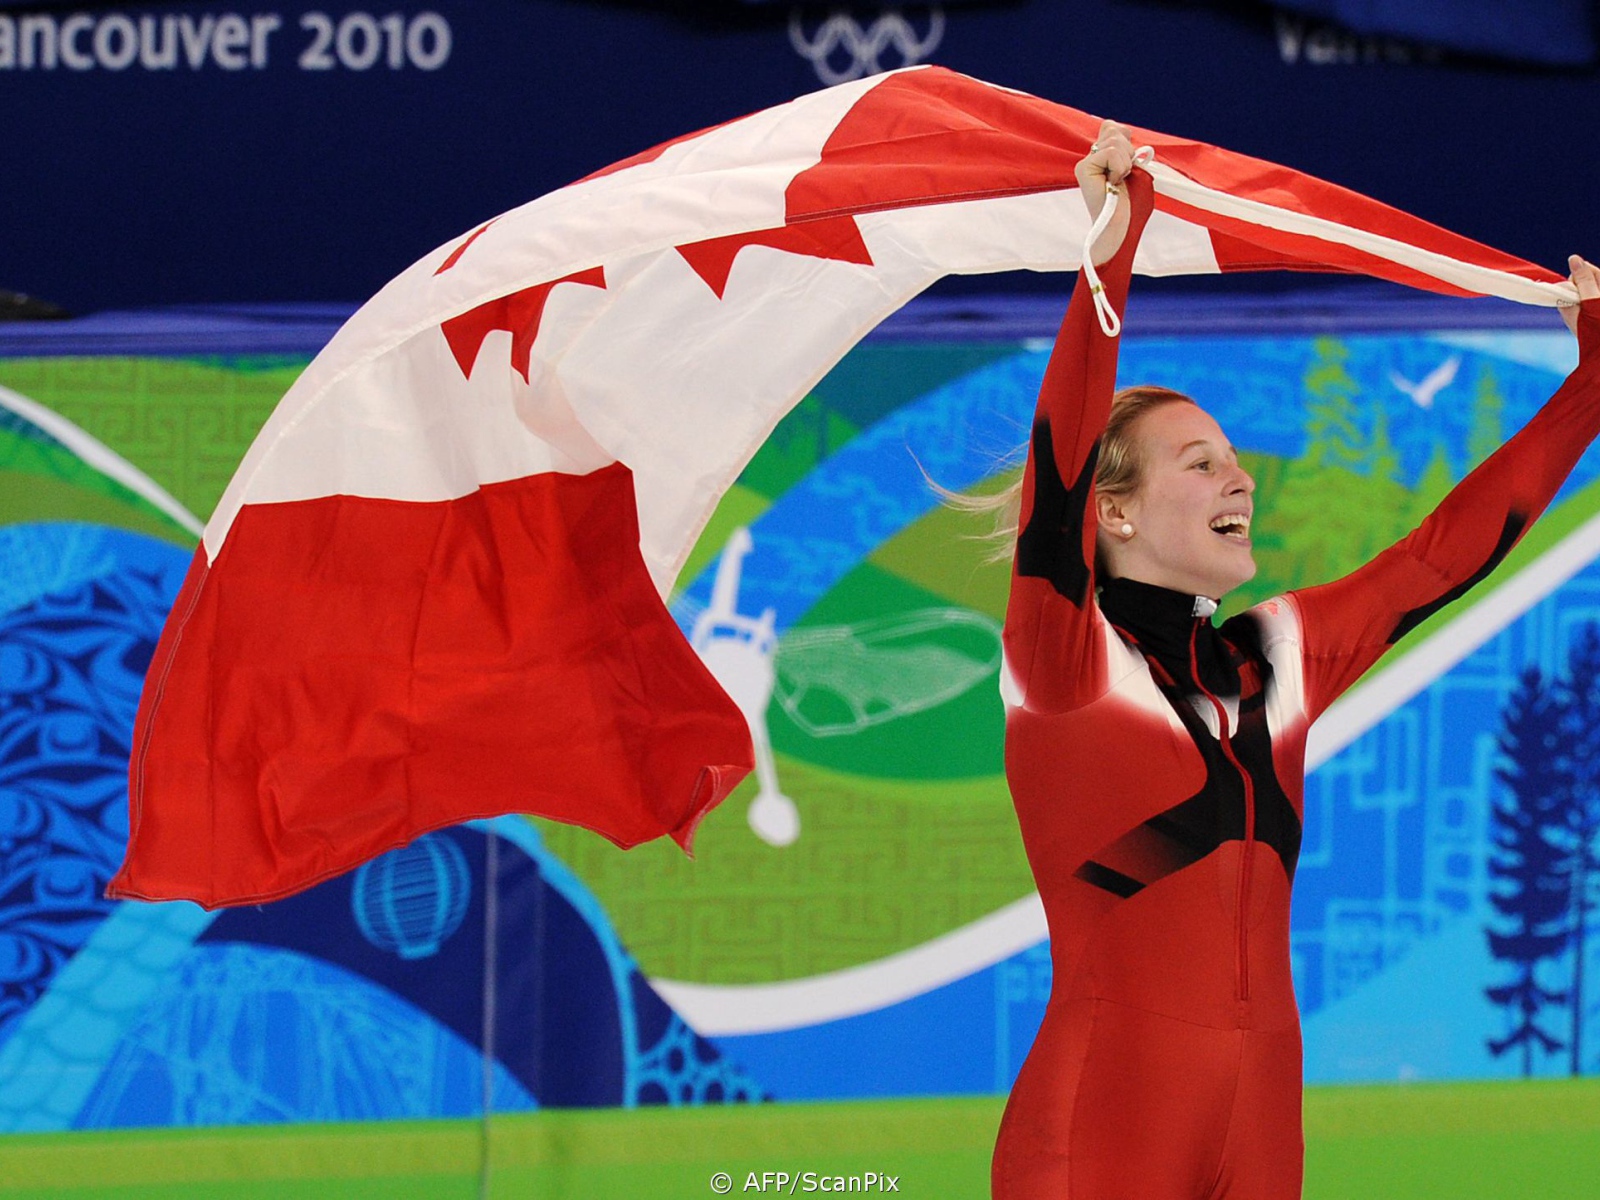 Мариан Сен-Желе канадская шорт-трекистка обладательница серебряной медали